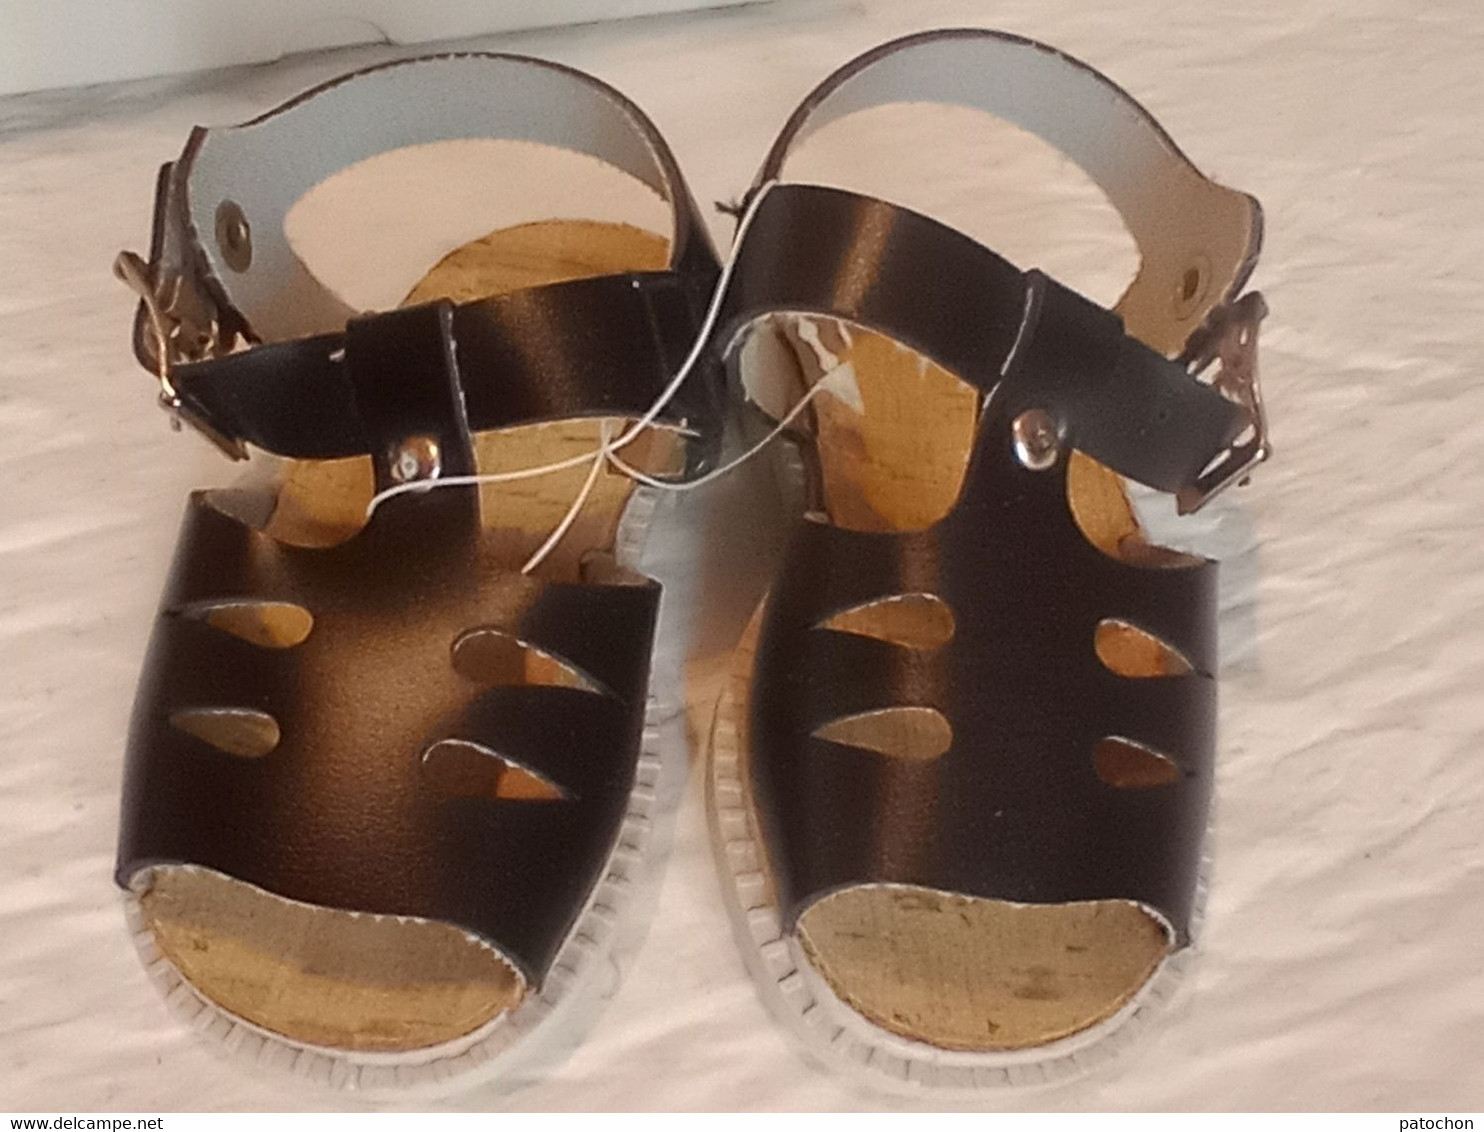 Sandale Bébé Baby Made In Italy Taille 20 Soit 13cm Cuir Liège élastomère Neuve! - Schuhe